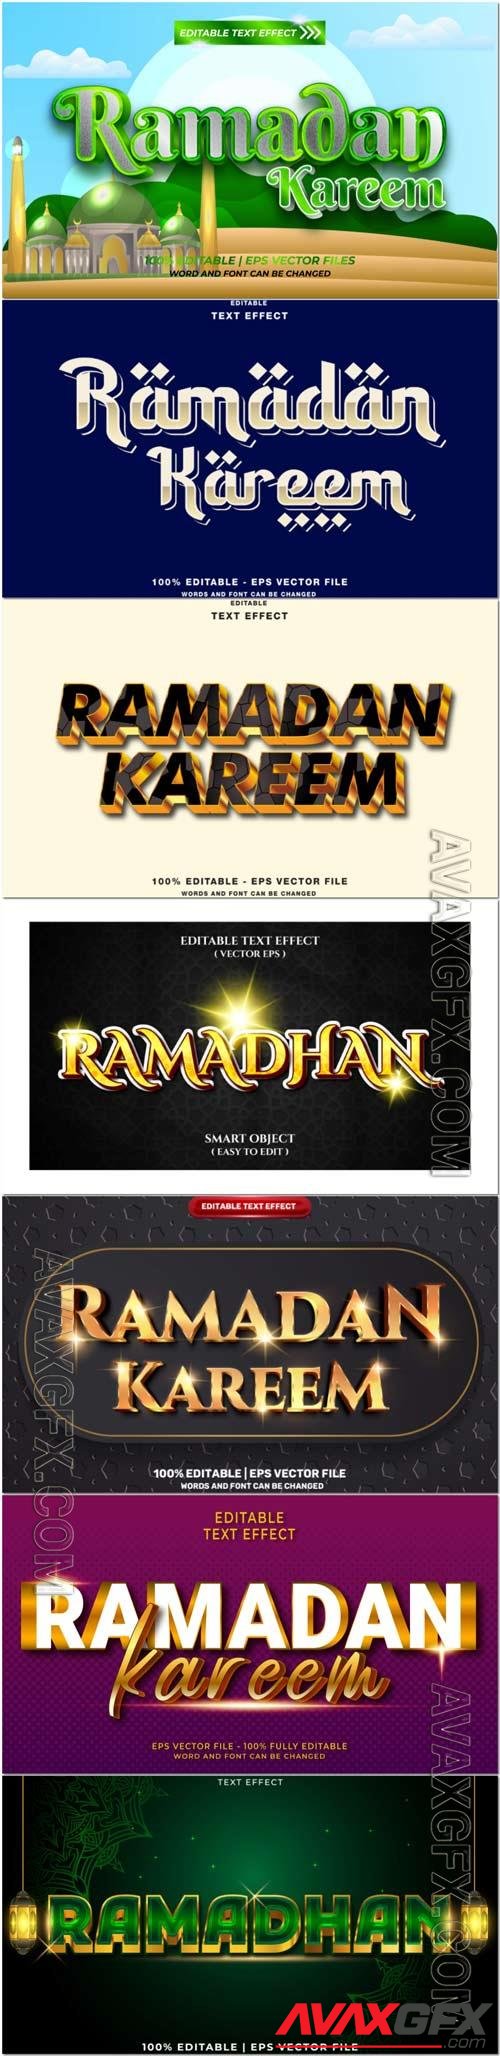 Ramadan kareem gold shiny 3d editable text effect